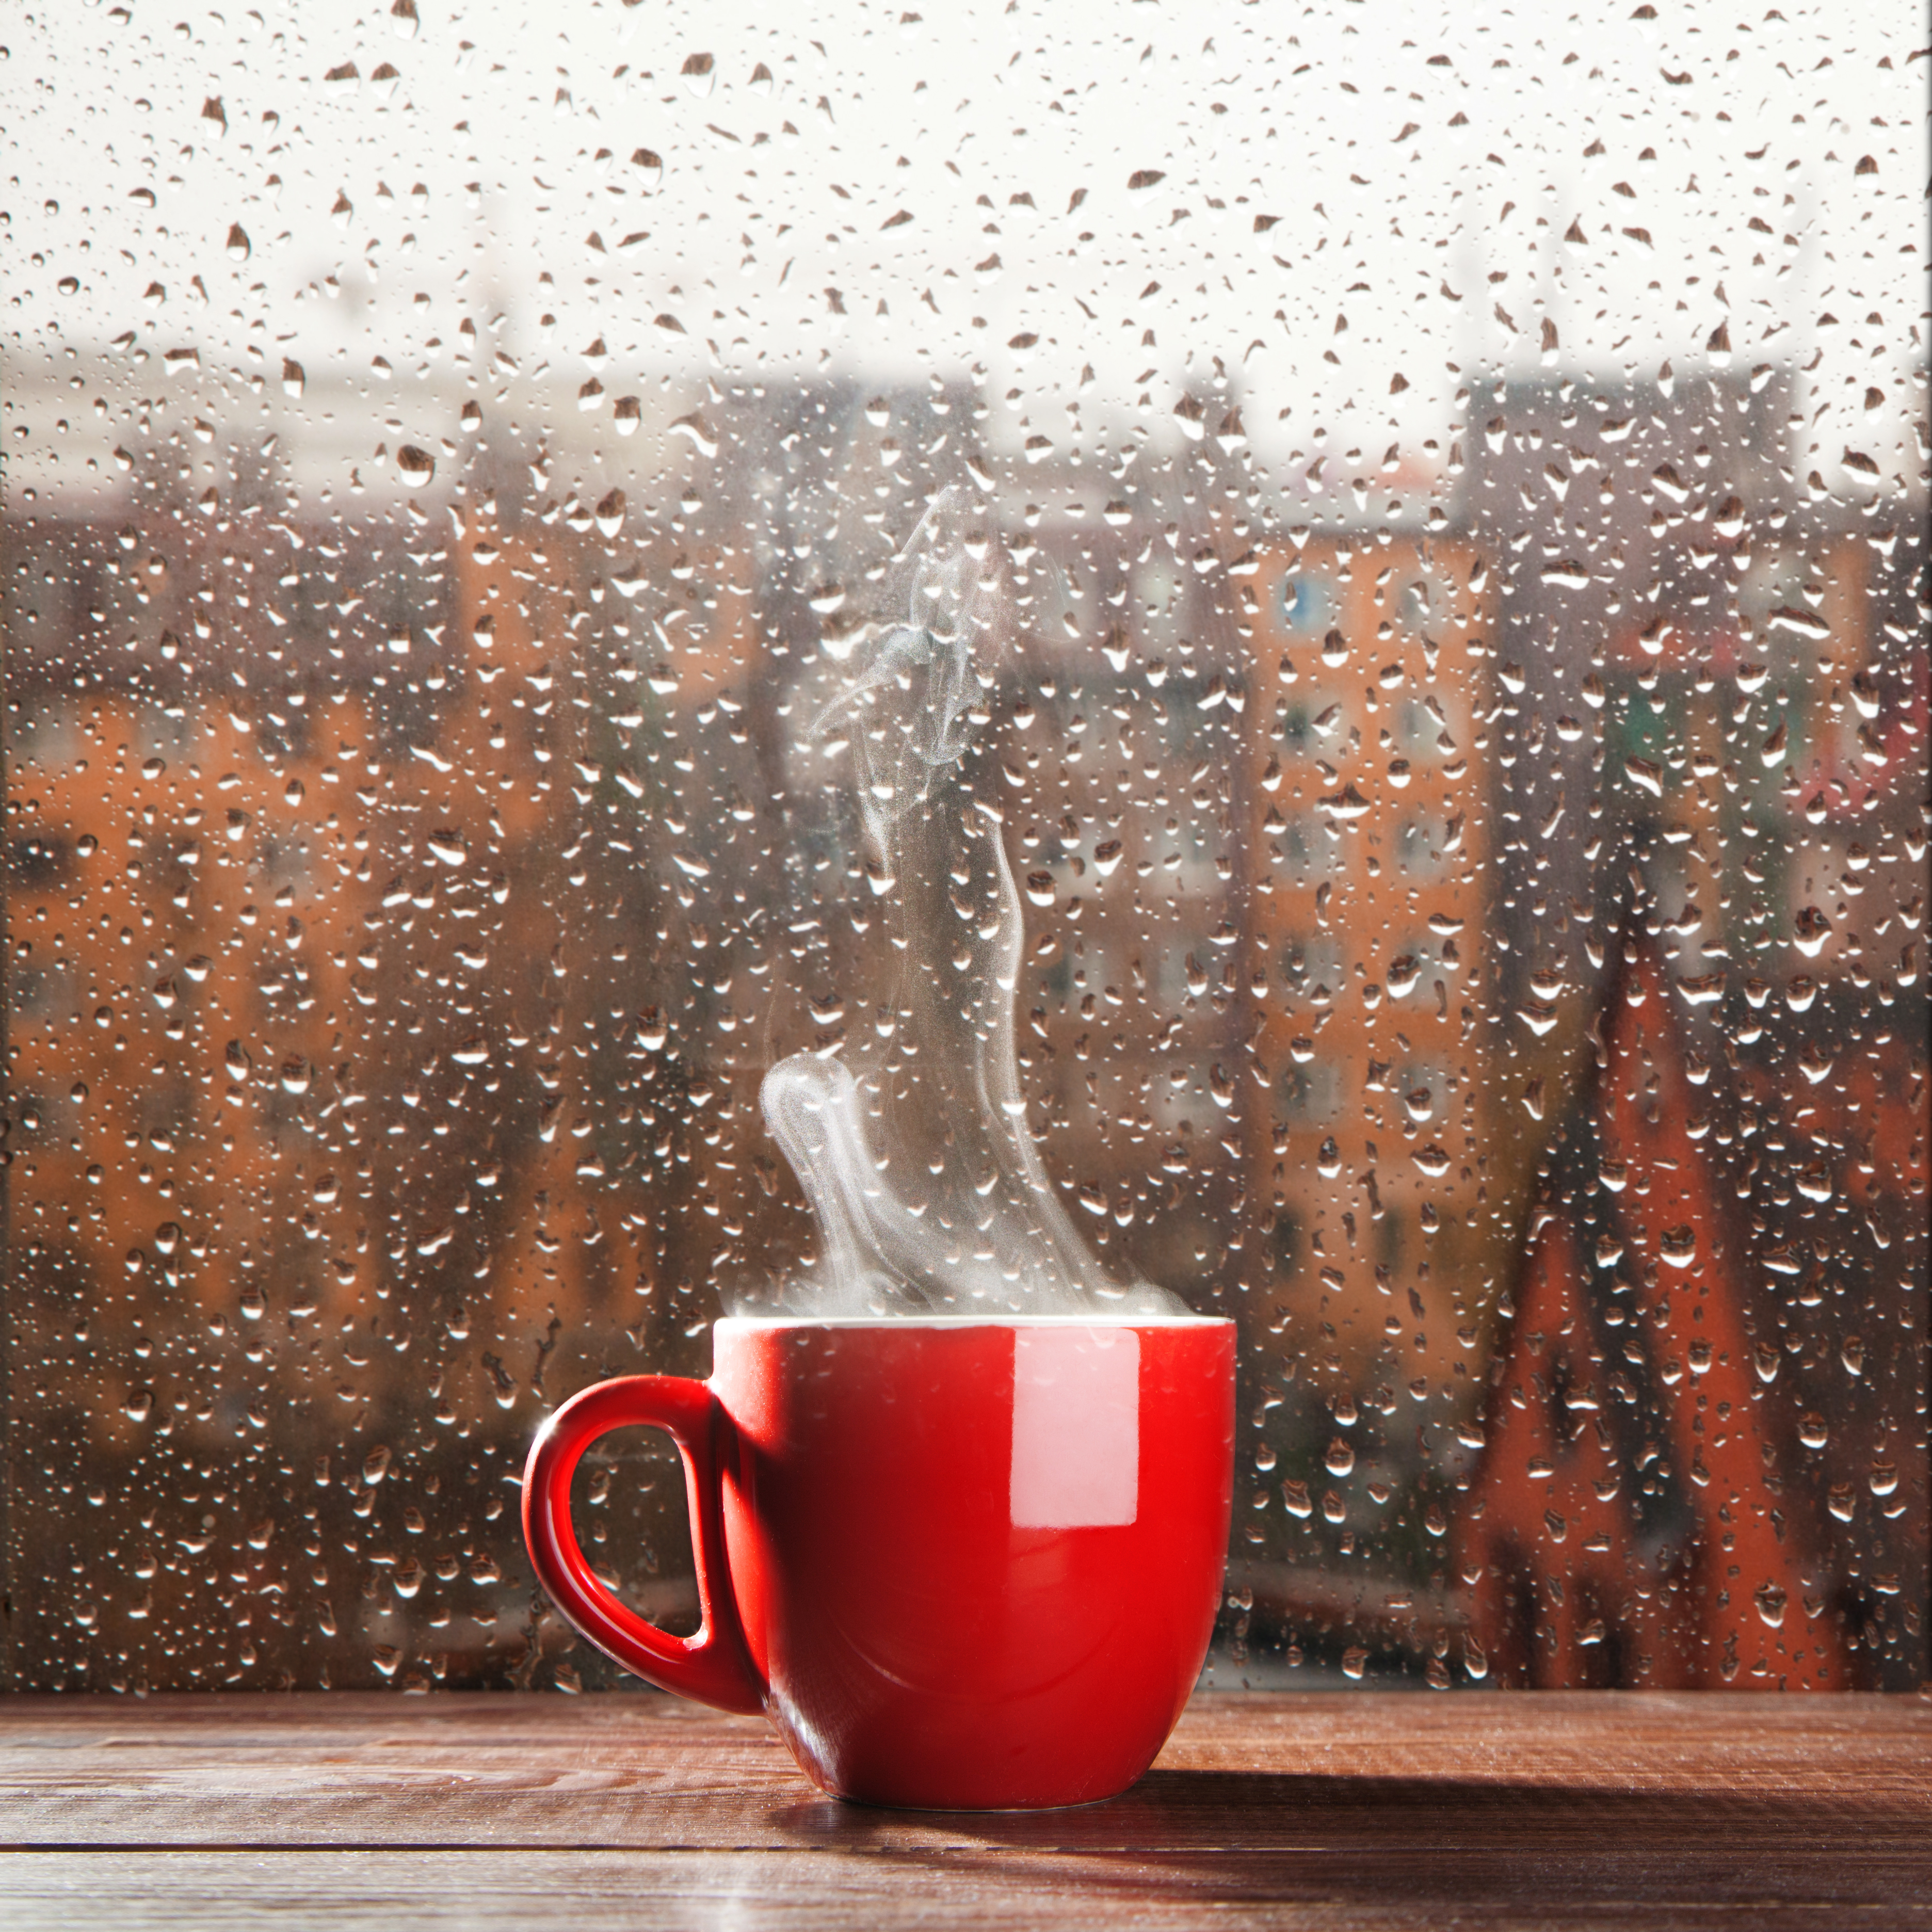 Coffee rainy day wallpaper hd